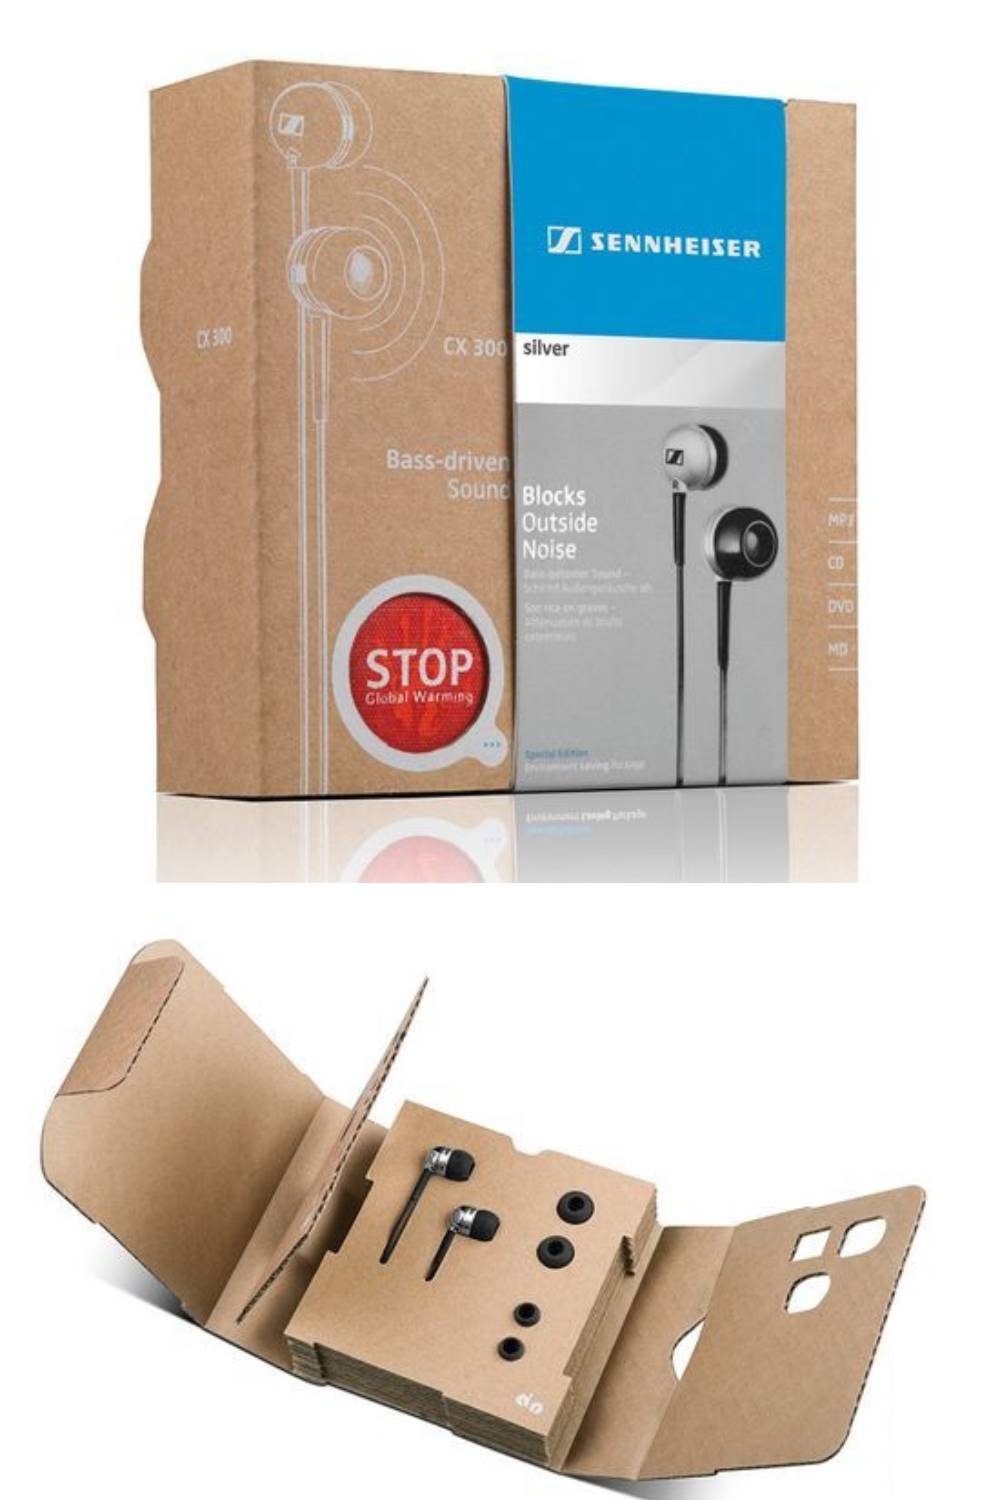 head phone packaging design inspiration